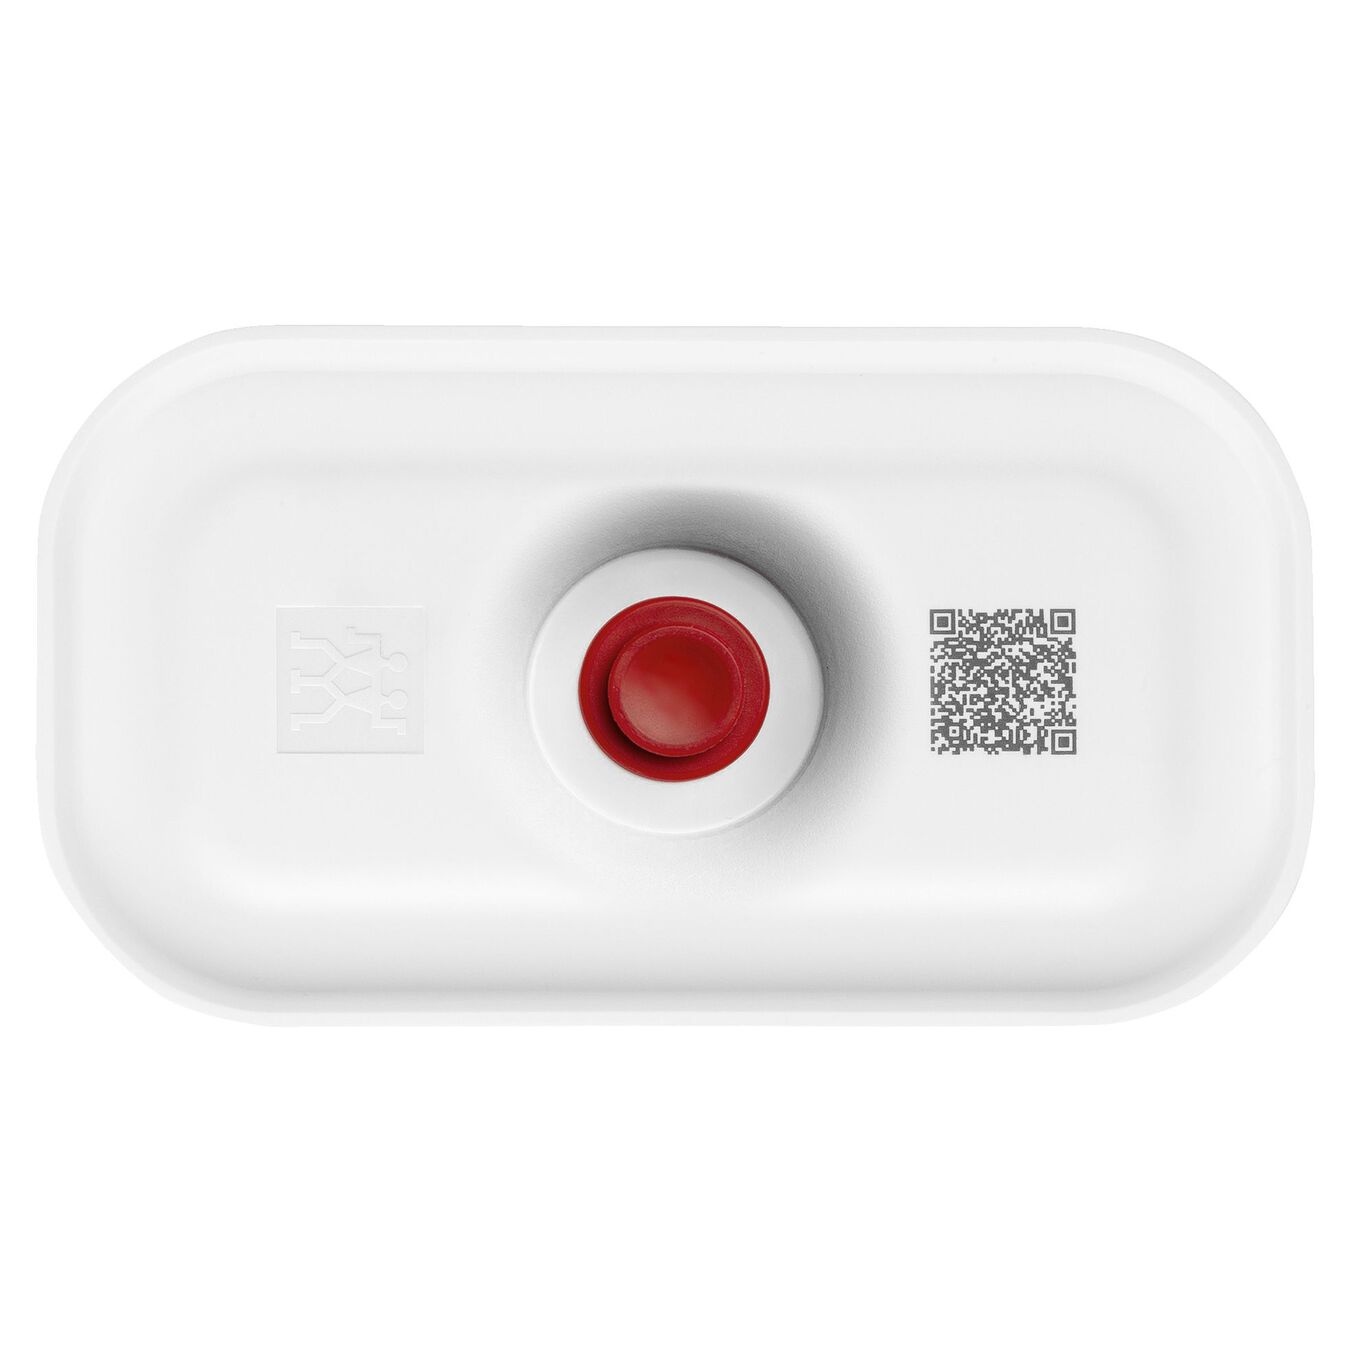 Vakuum Lunchbox S, Kunststoff, Weiß-Rot,,large 2